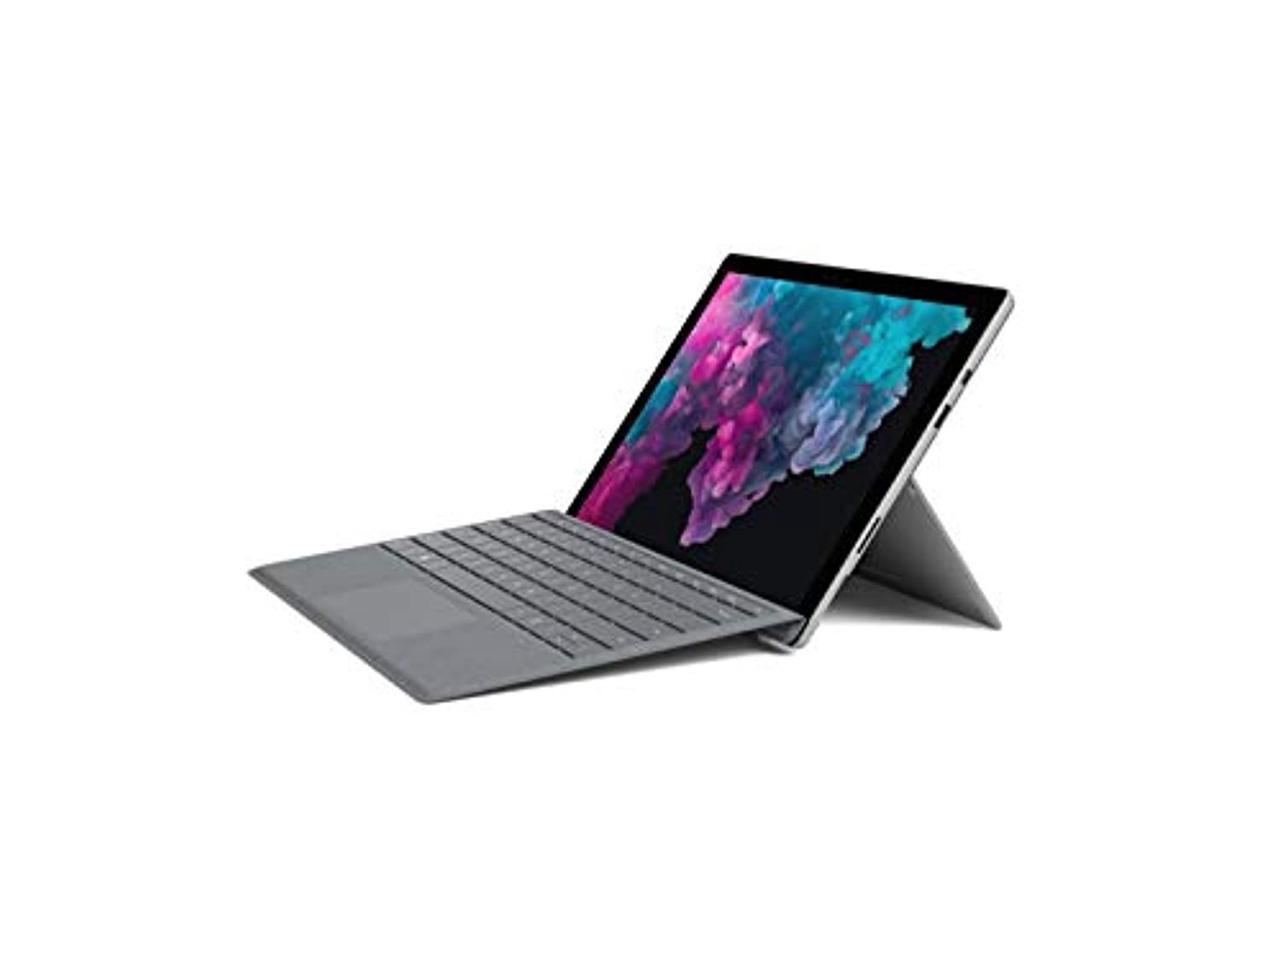 Microsoft Surface Pro 6 (Intel Core i5, 128GB SSD, 8GB RAM) + 